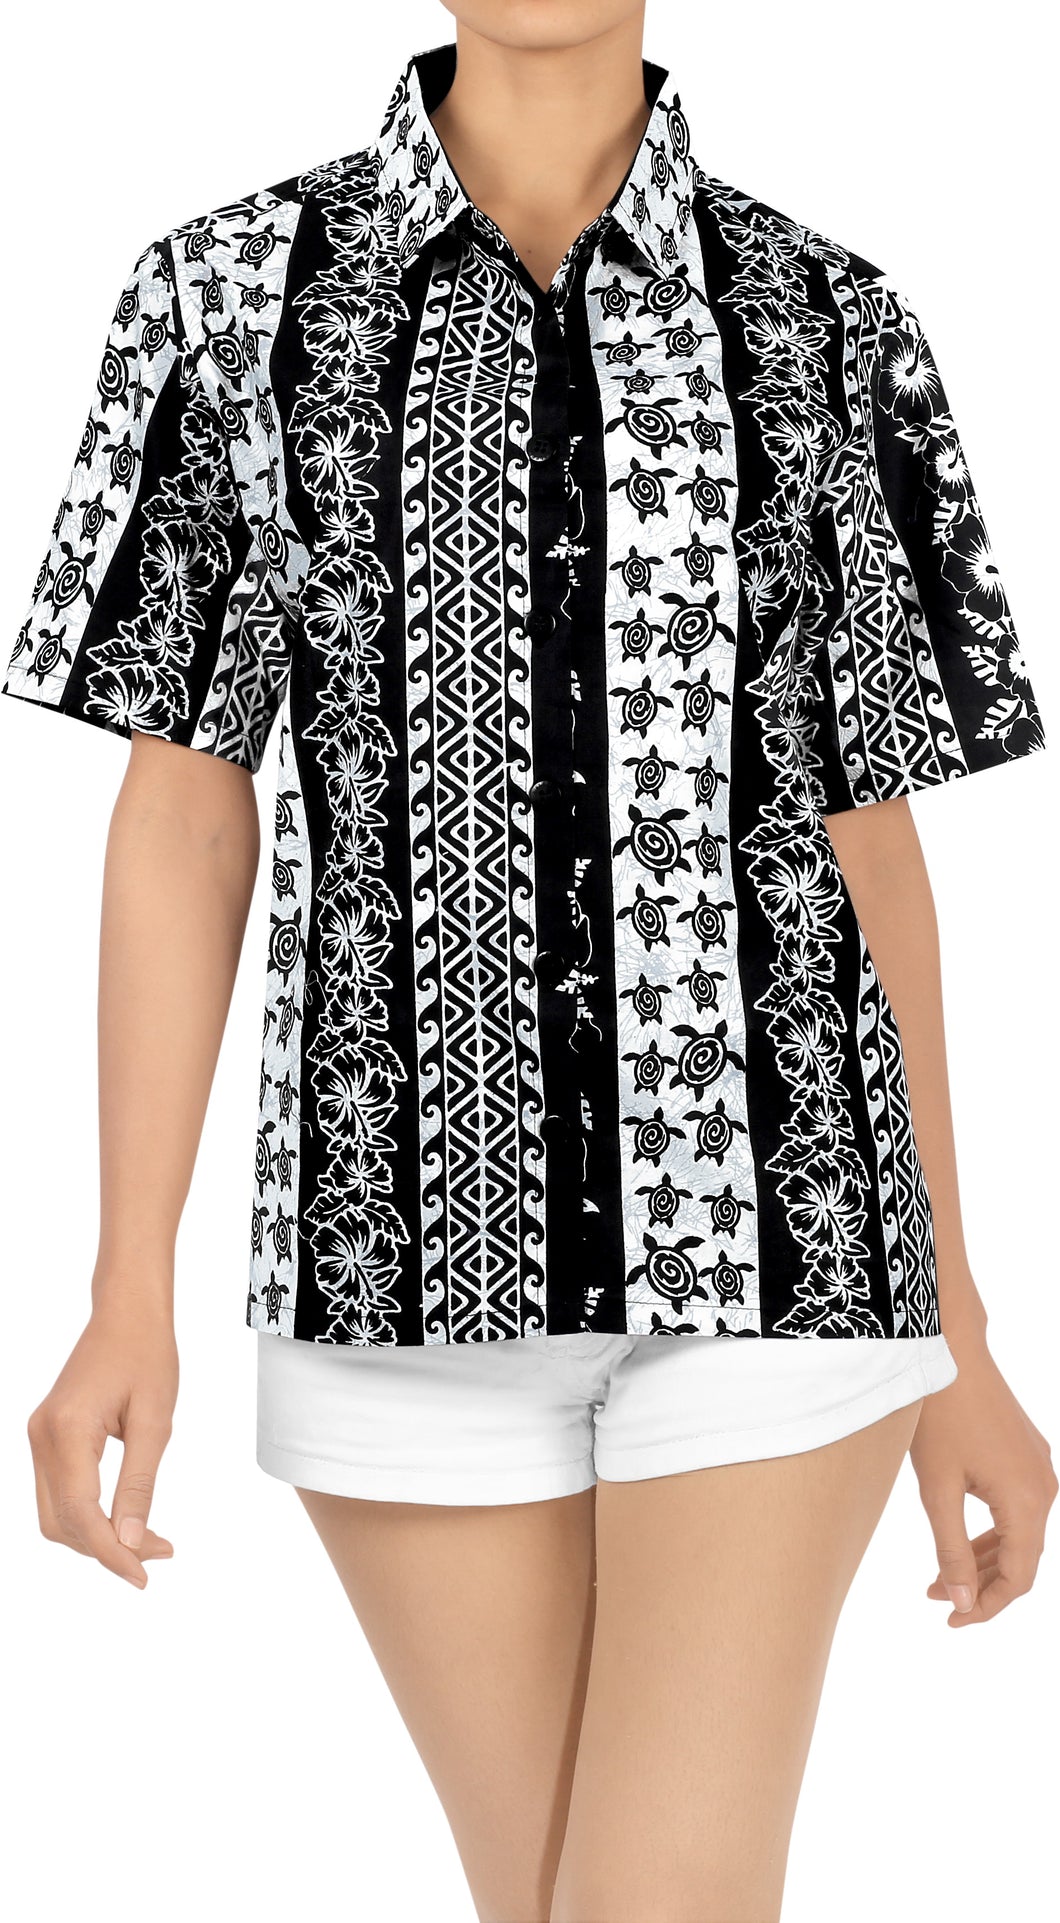 LA LEELA Women's Beach Casual Hawaiian Blouses Short Sleeve button Down Shirt Black